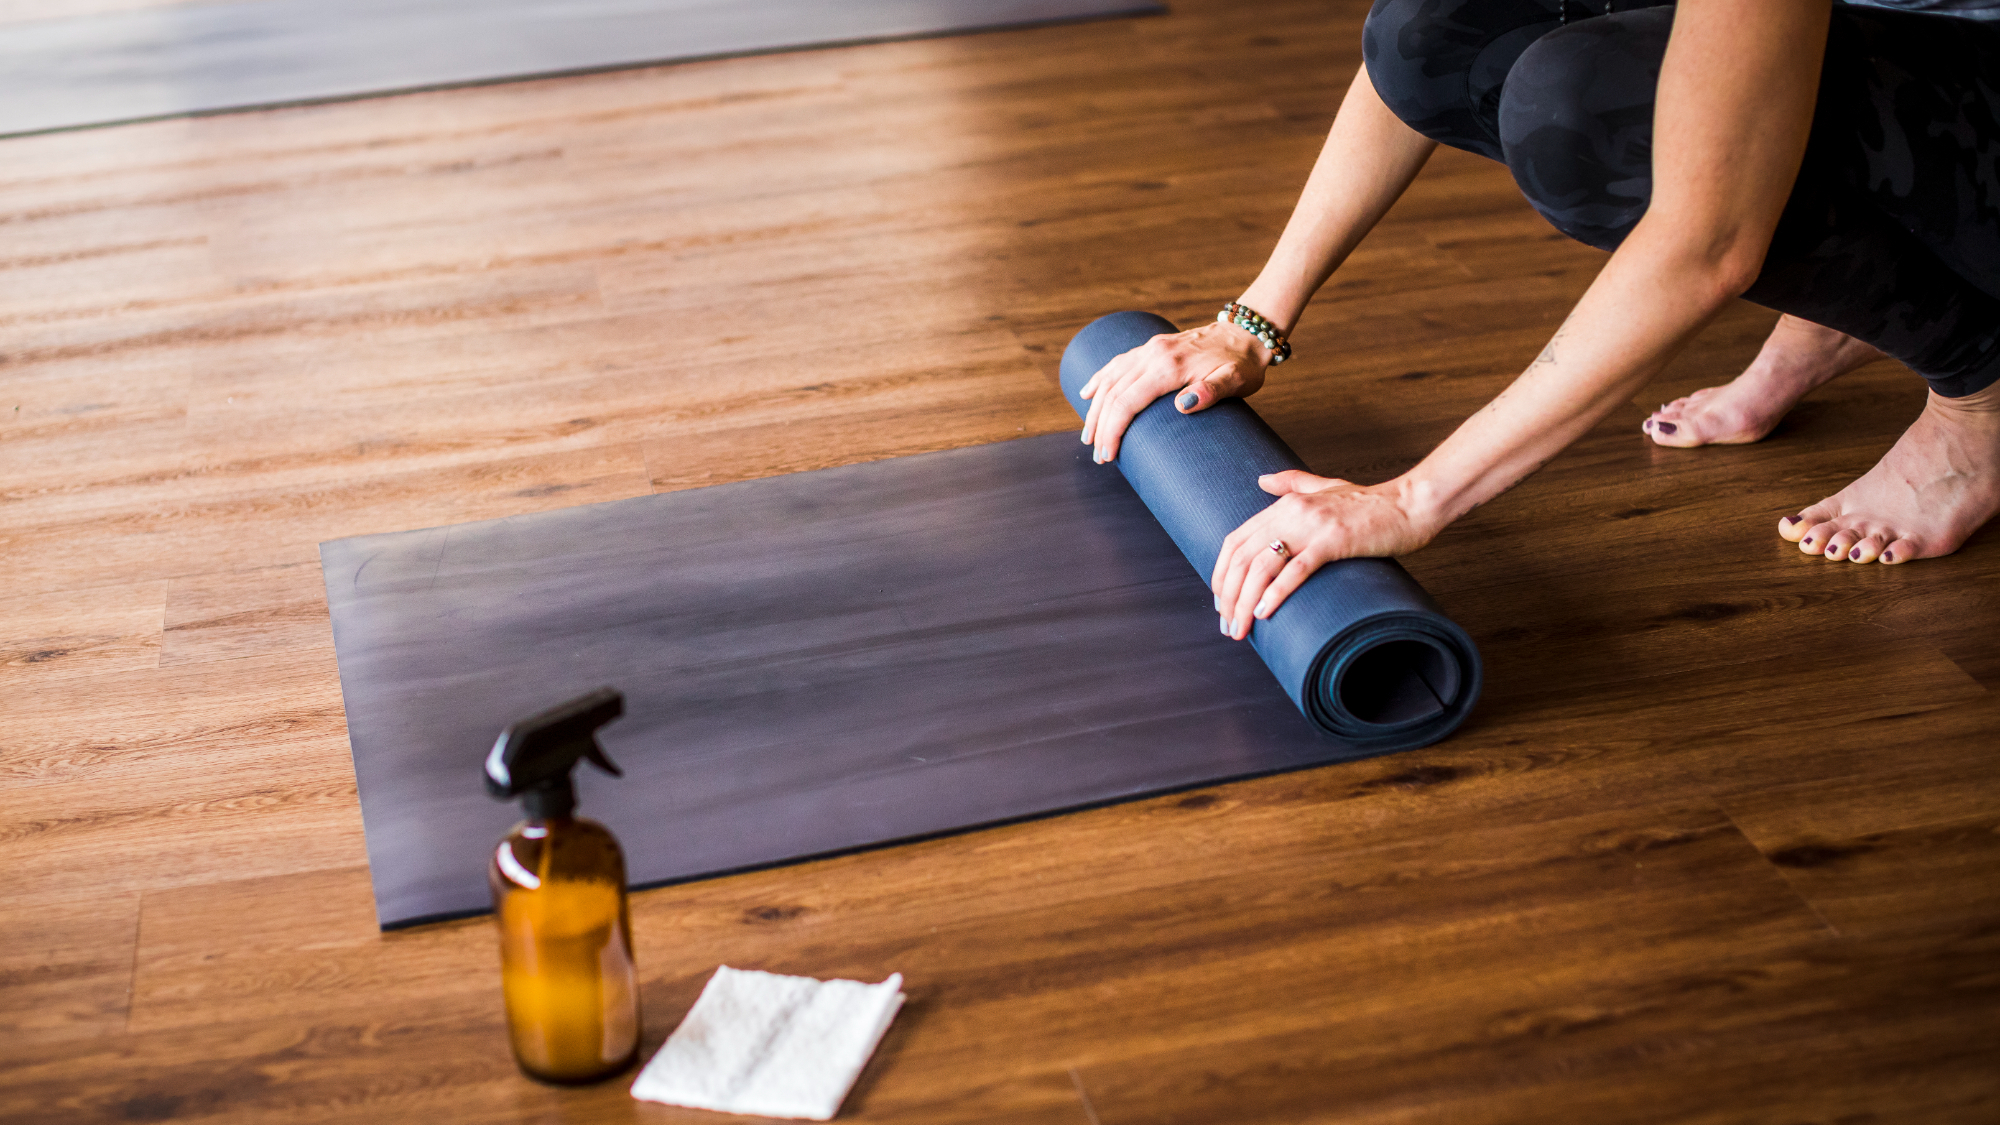 How To Clean Manduka Yoga Mat